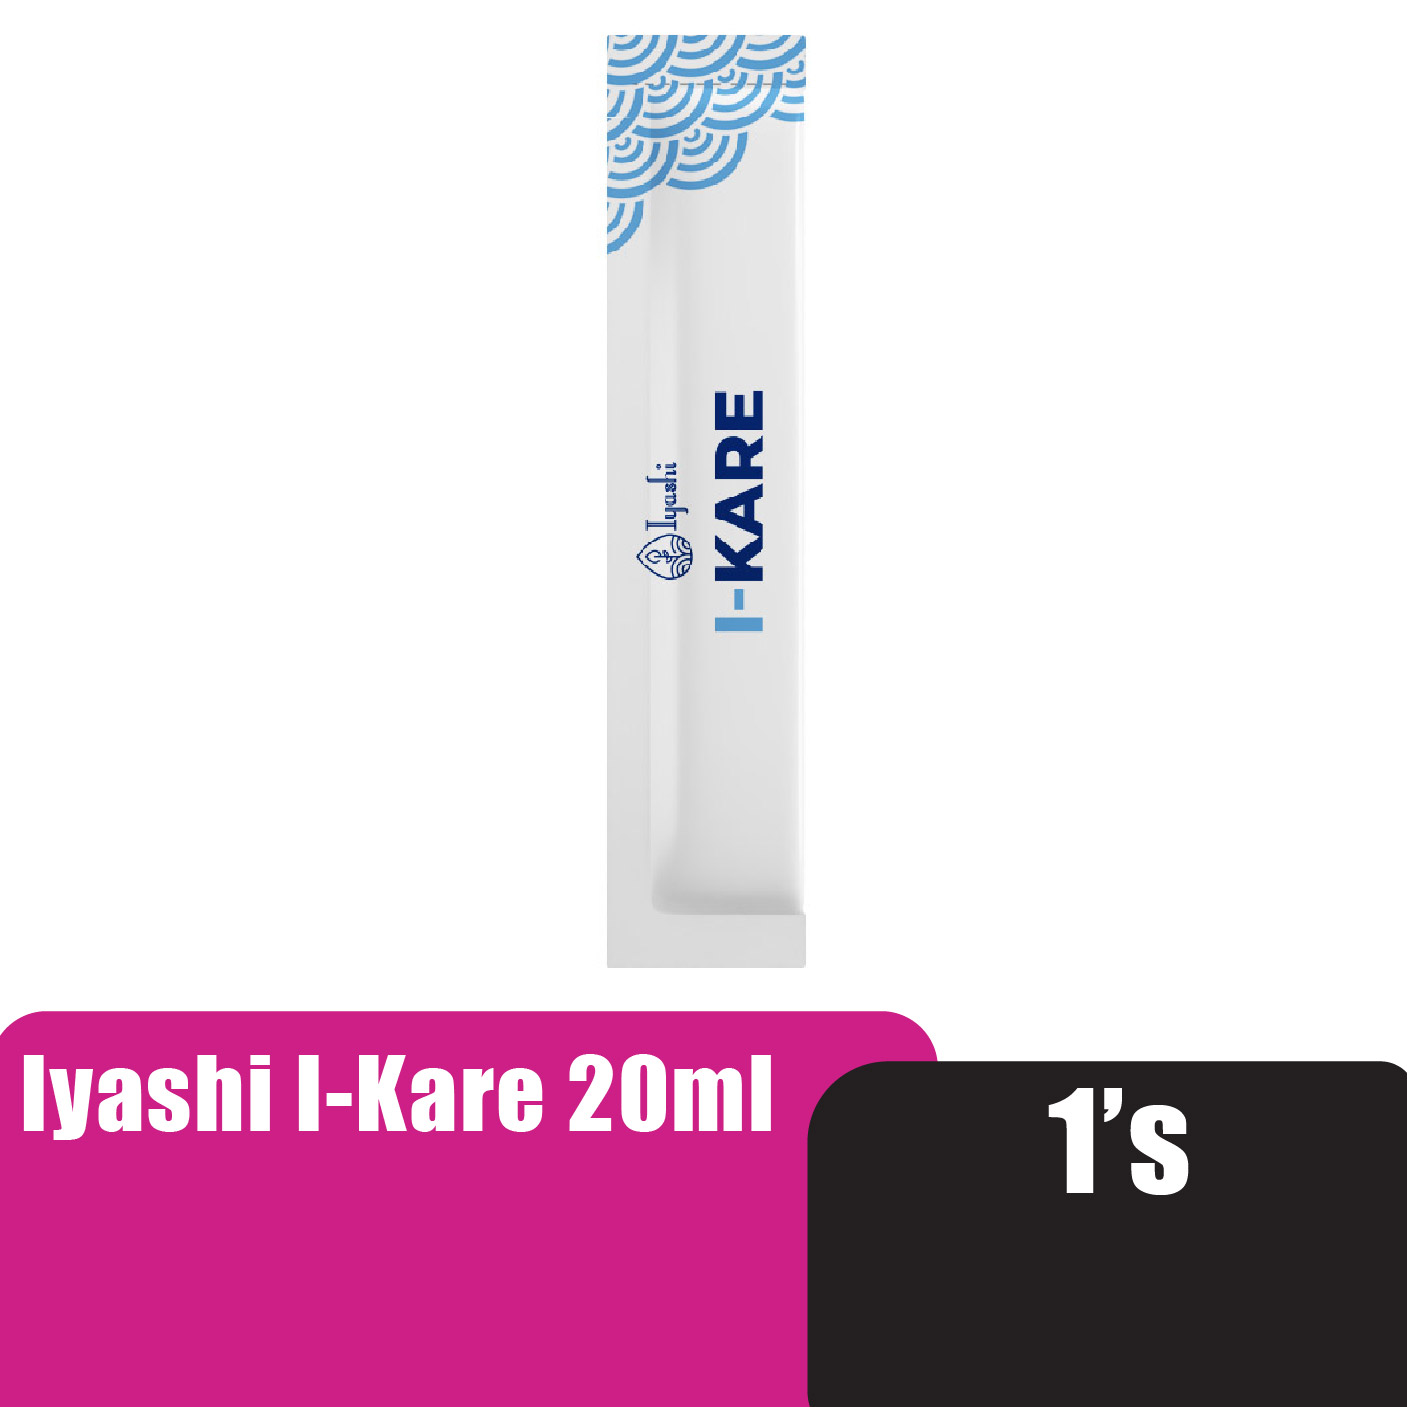 Iyashi I-Kare - Eye Supplement for Vision / Eye Care Supplement ( 眼睛 保健品 / 護眼 保健品 ) 20ml x 1's